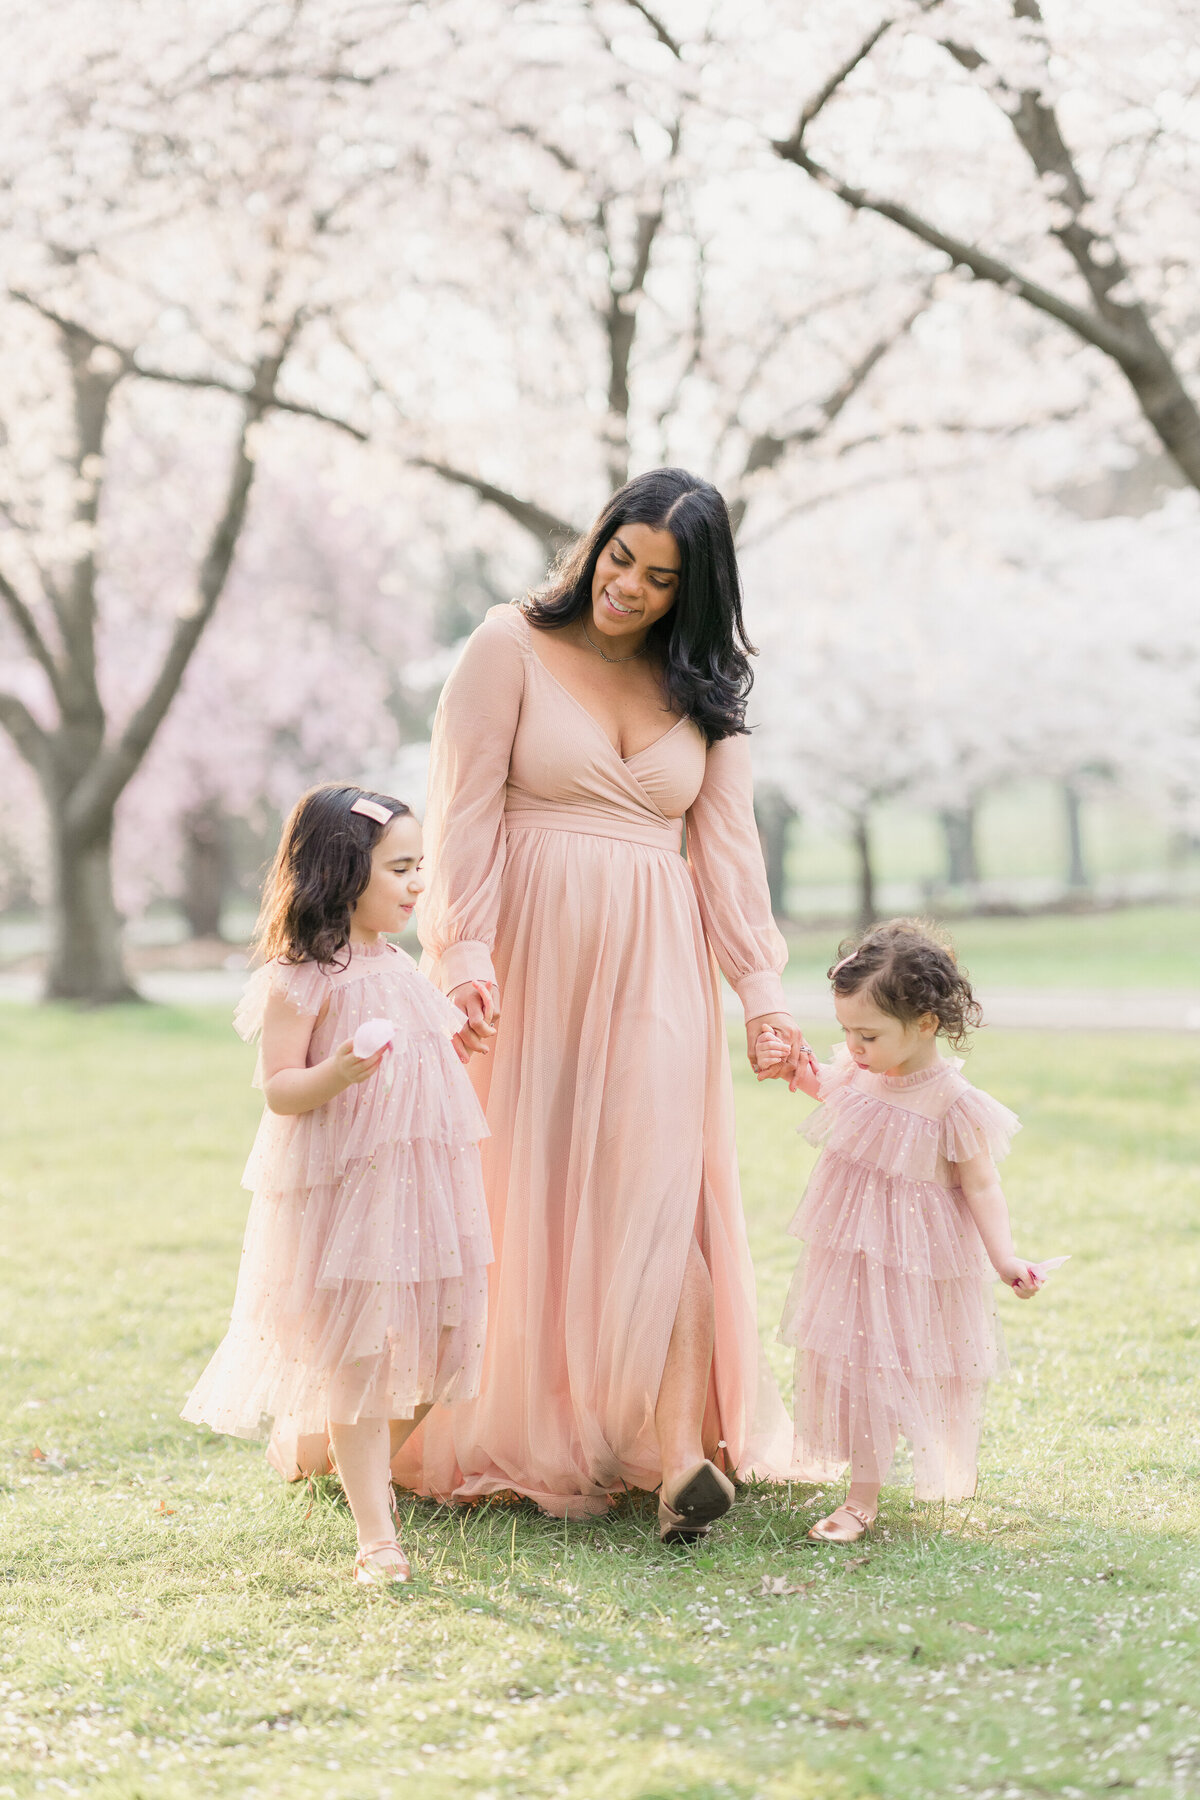 Courtney-Landrum-Photography-Motherhood-Cherry-Blossoms-13